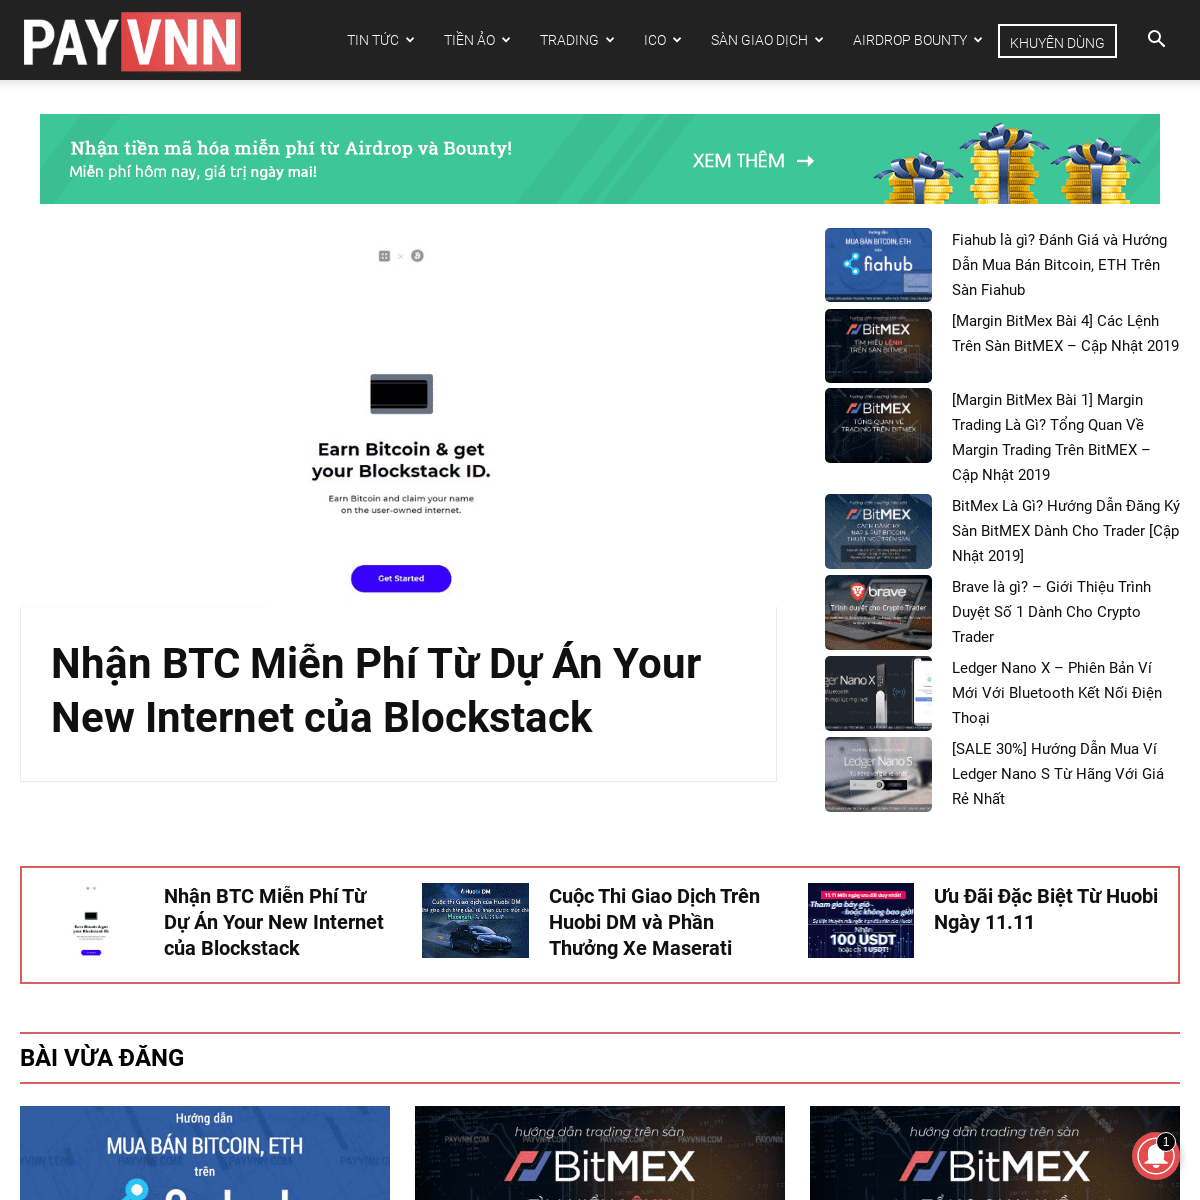 A complete backup of payvnn.com